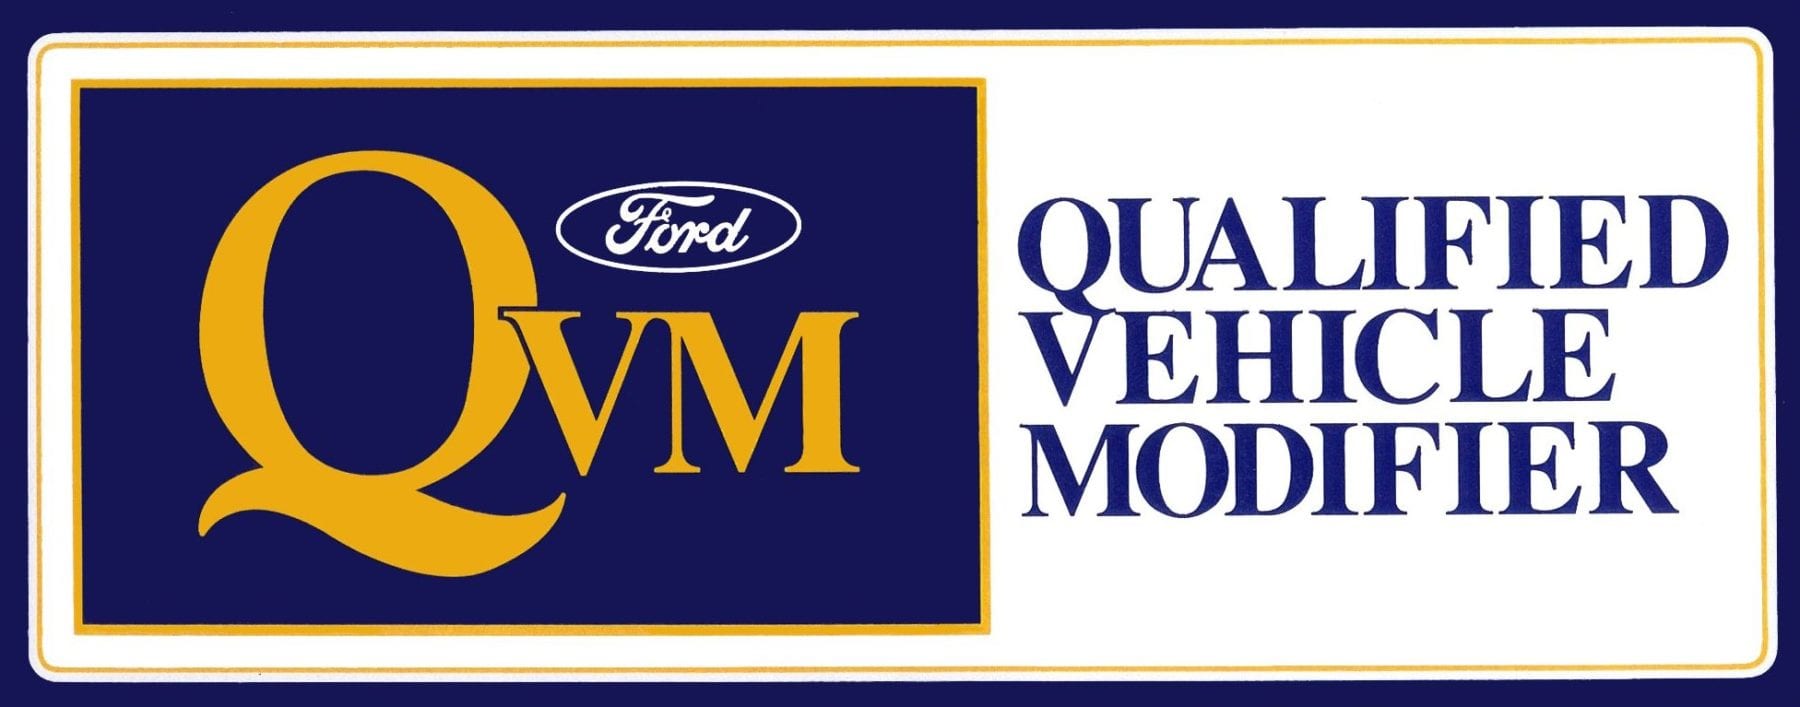 Ford Motor Company Qualified Vehicle Modifier Program MoveMobility Winnipeg Mississauga Canada